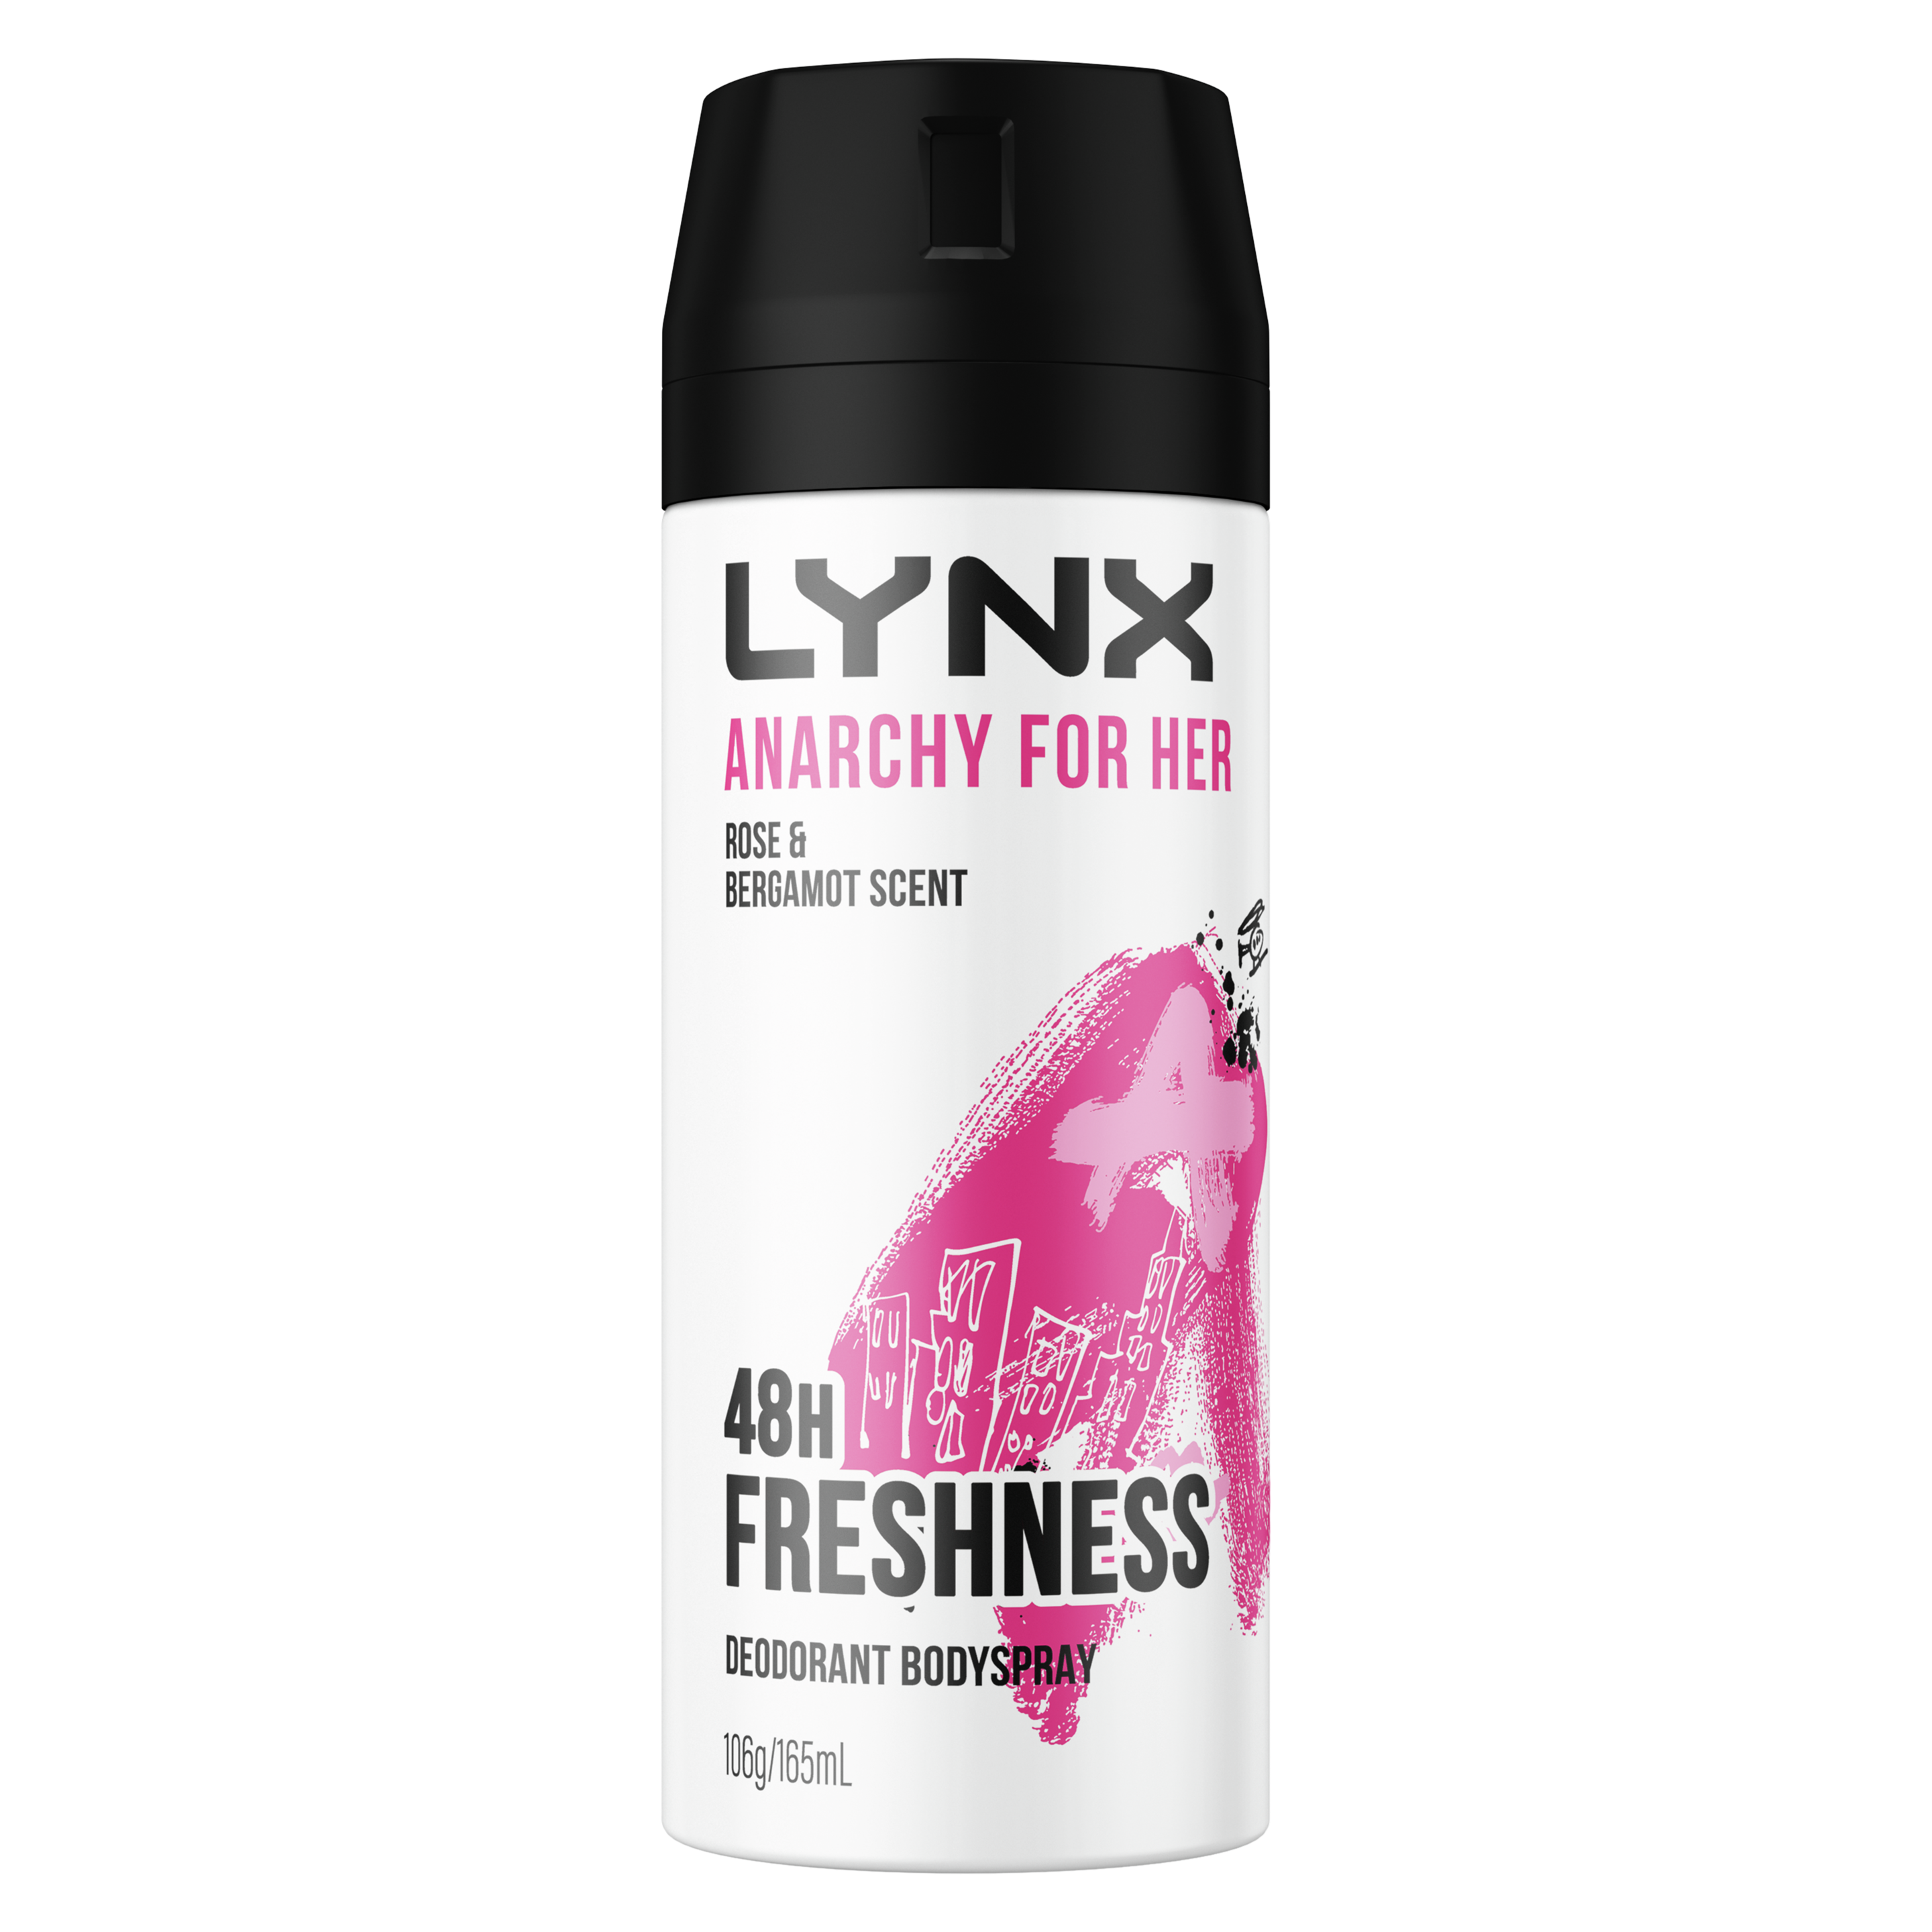 Lynx Anarchy for Her Body Spray